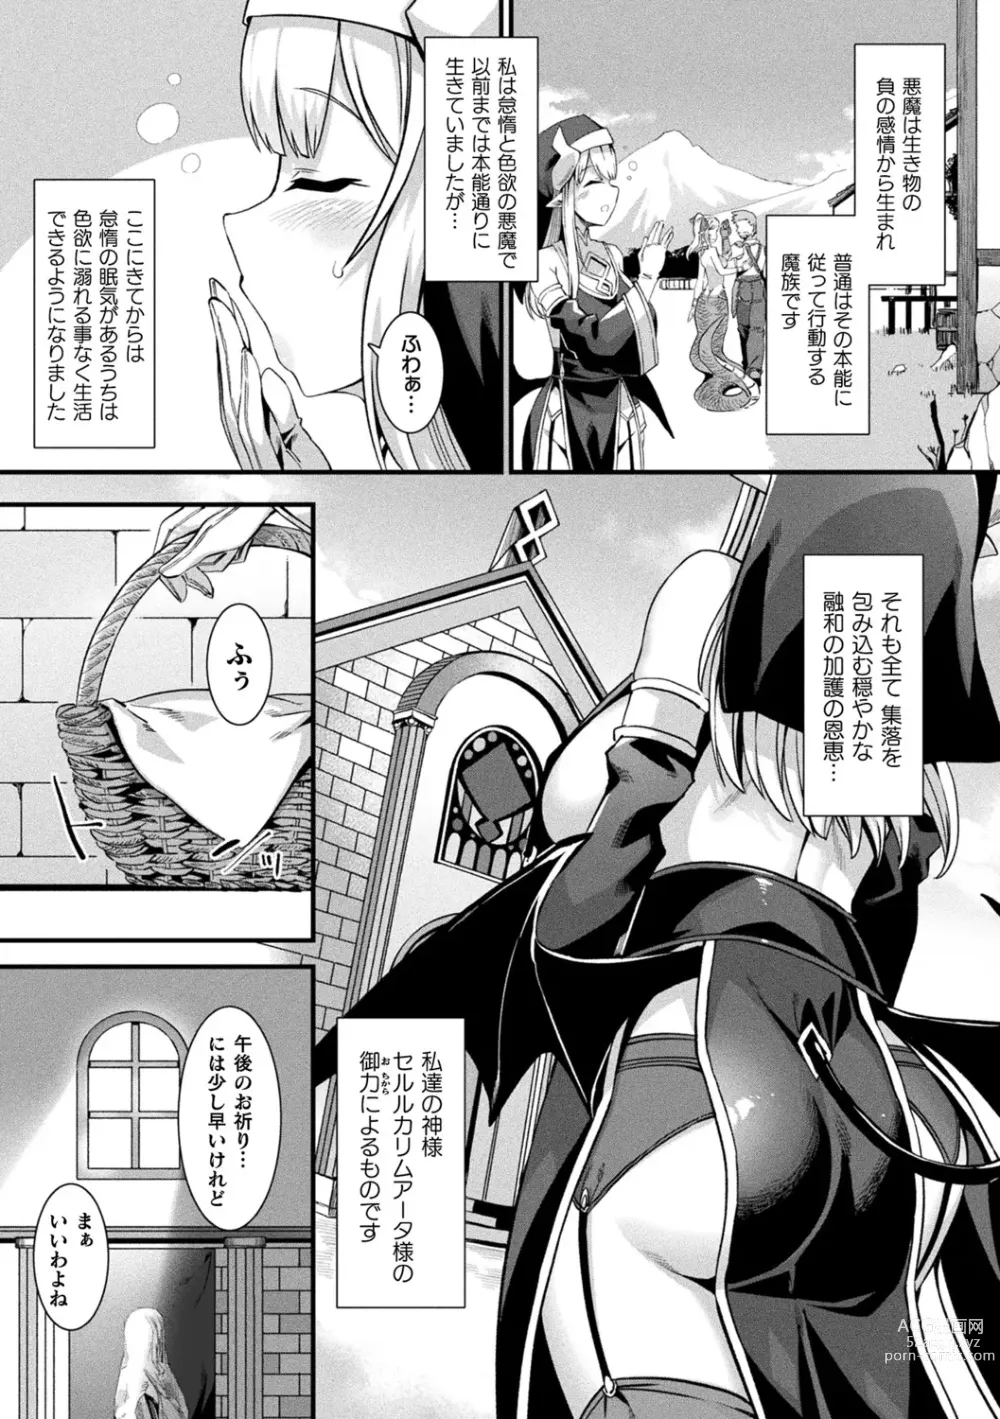 Page 7 of manga Kamisama Love Tune!